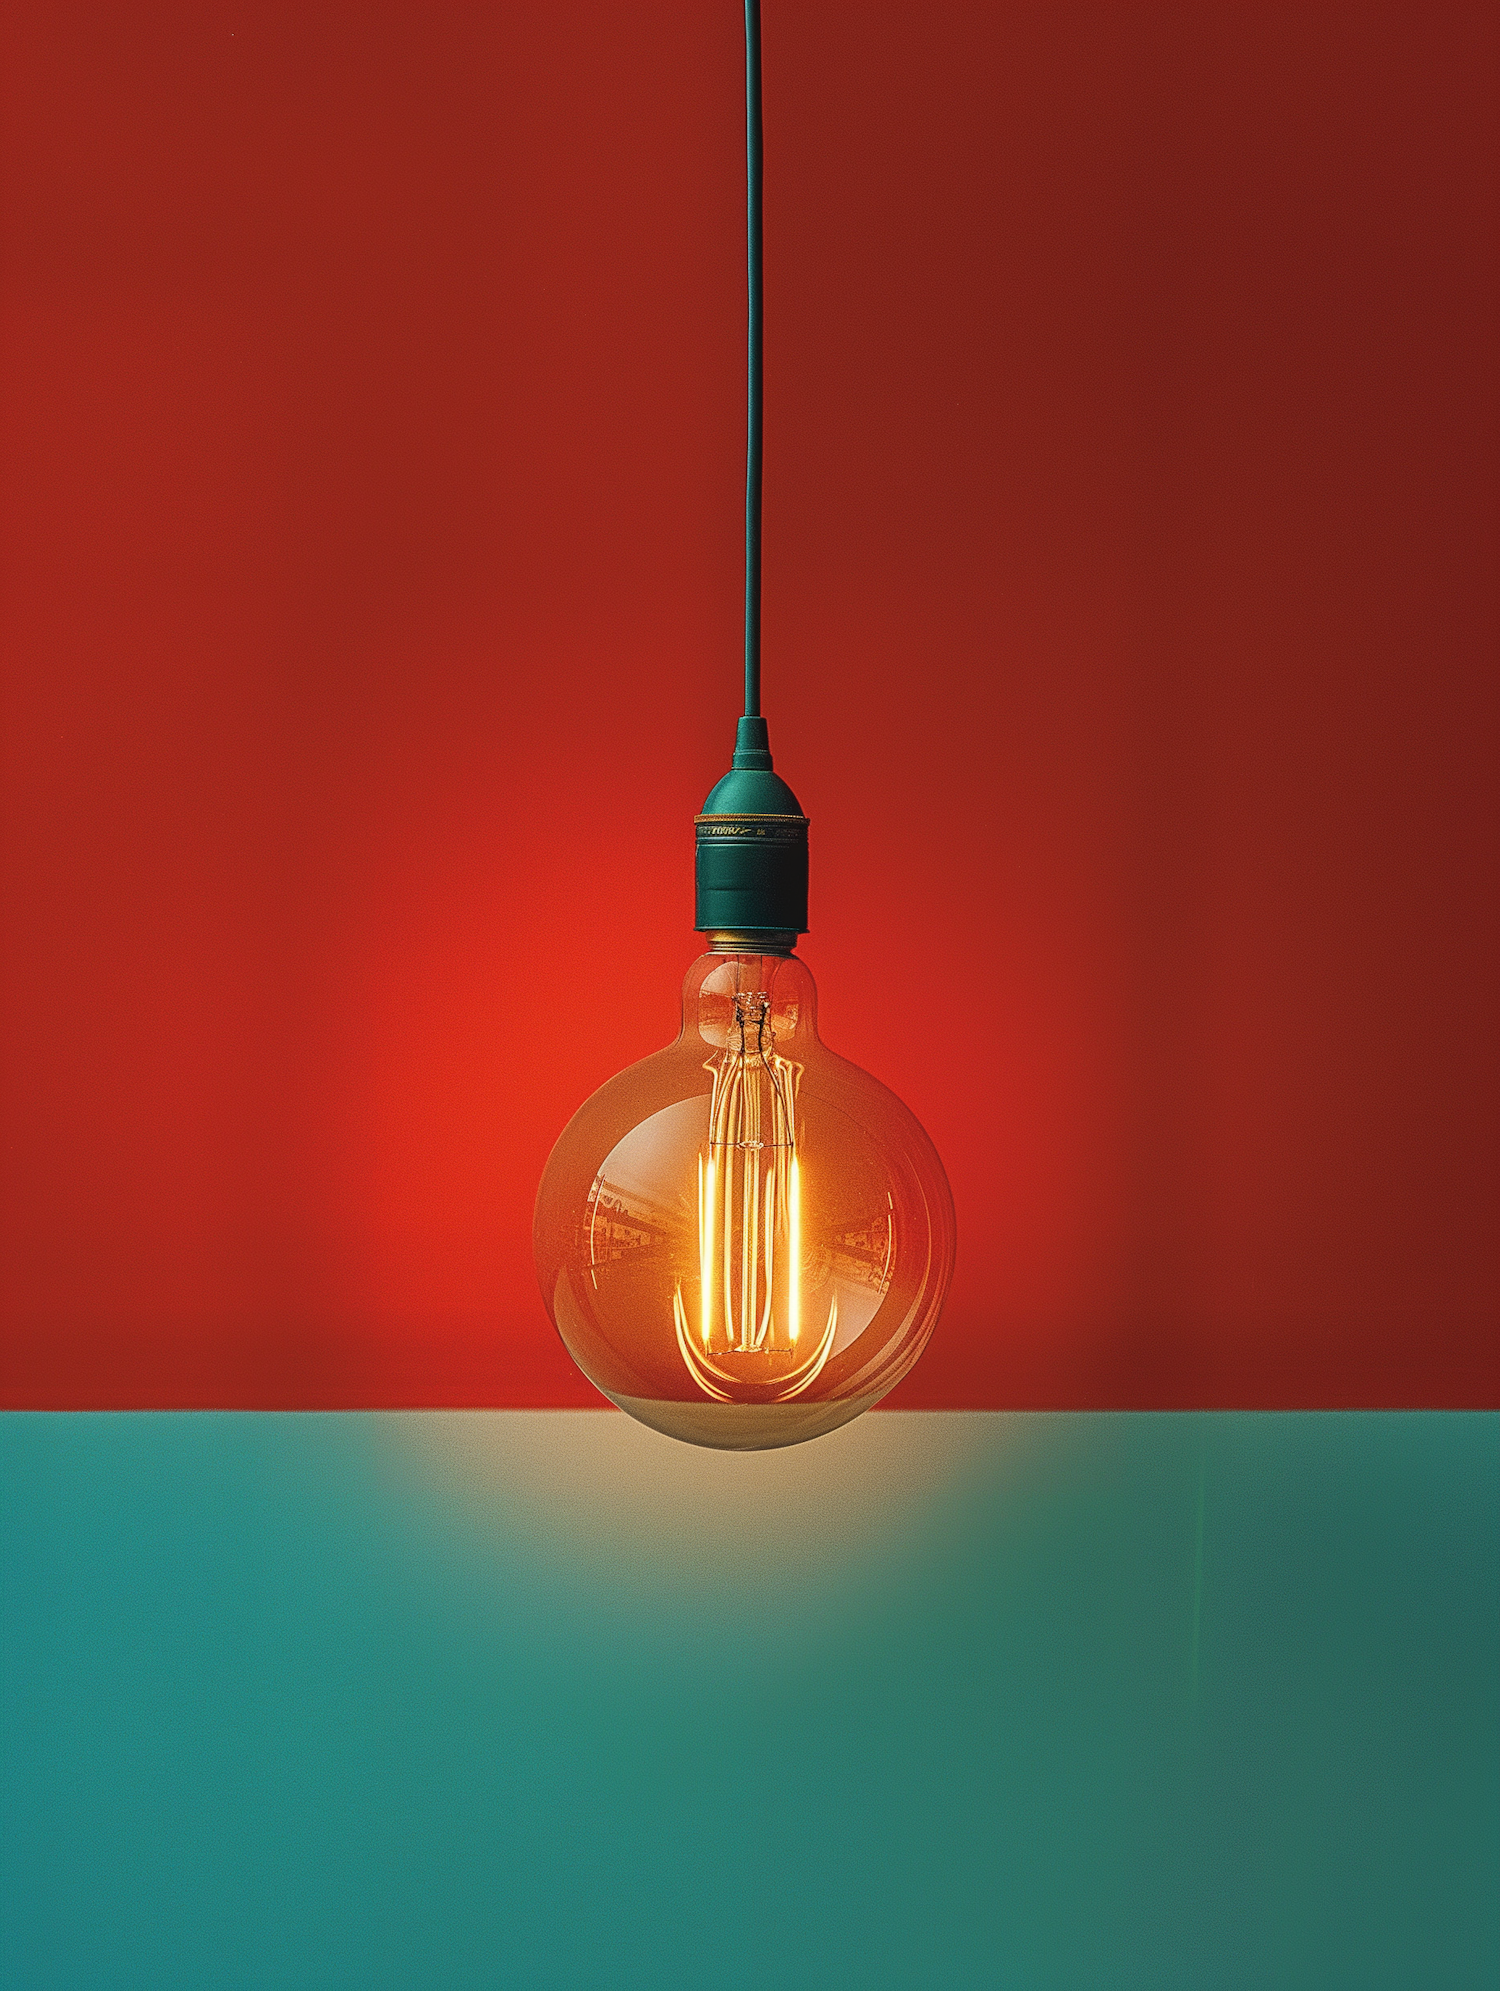 Illuminated Incandescent Light Bulb Against Colorful Background